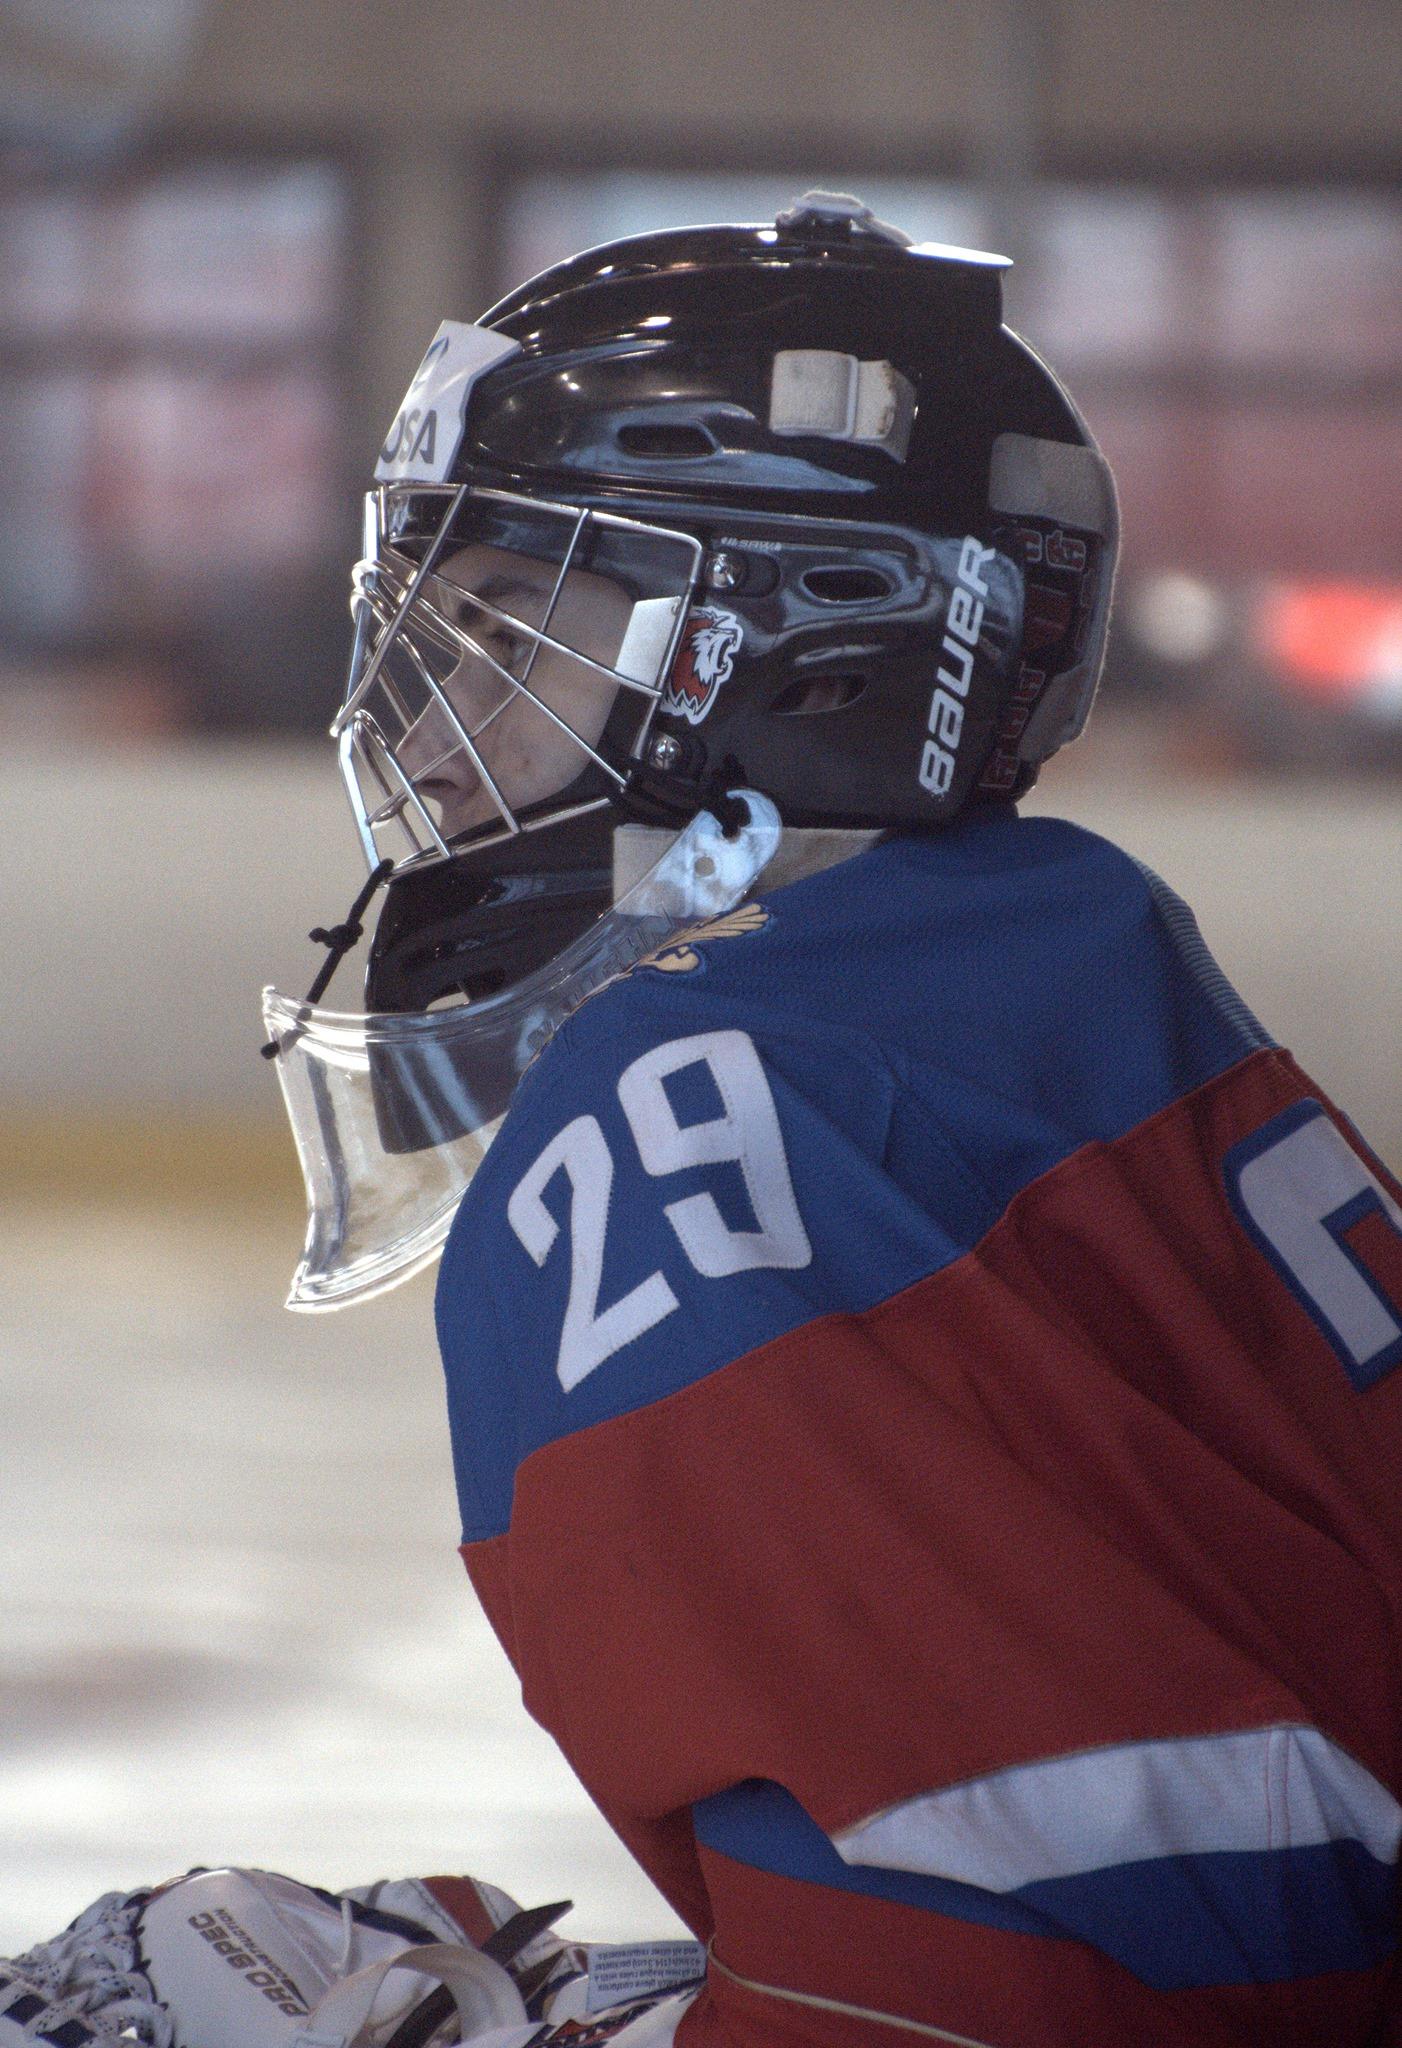 Photo hockey reportage ICHT: Rsum et photos de Russie U17 - USA U17